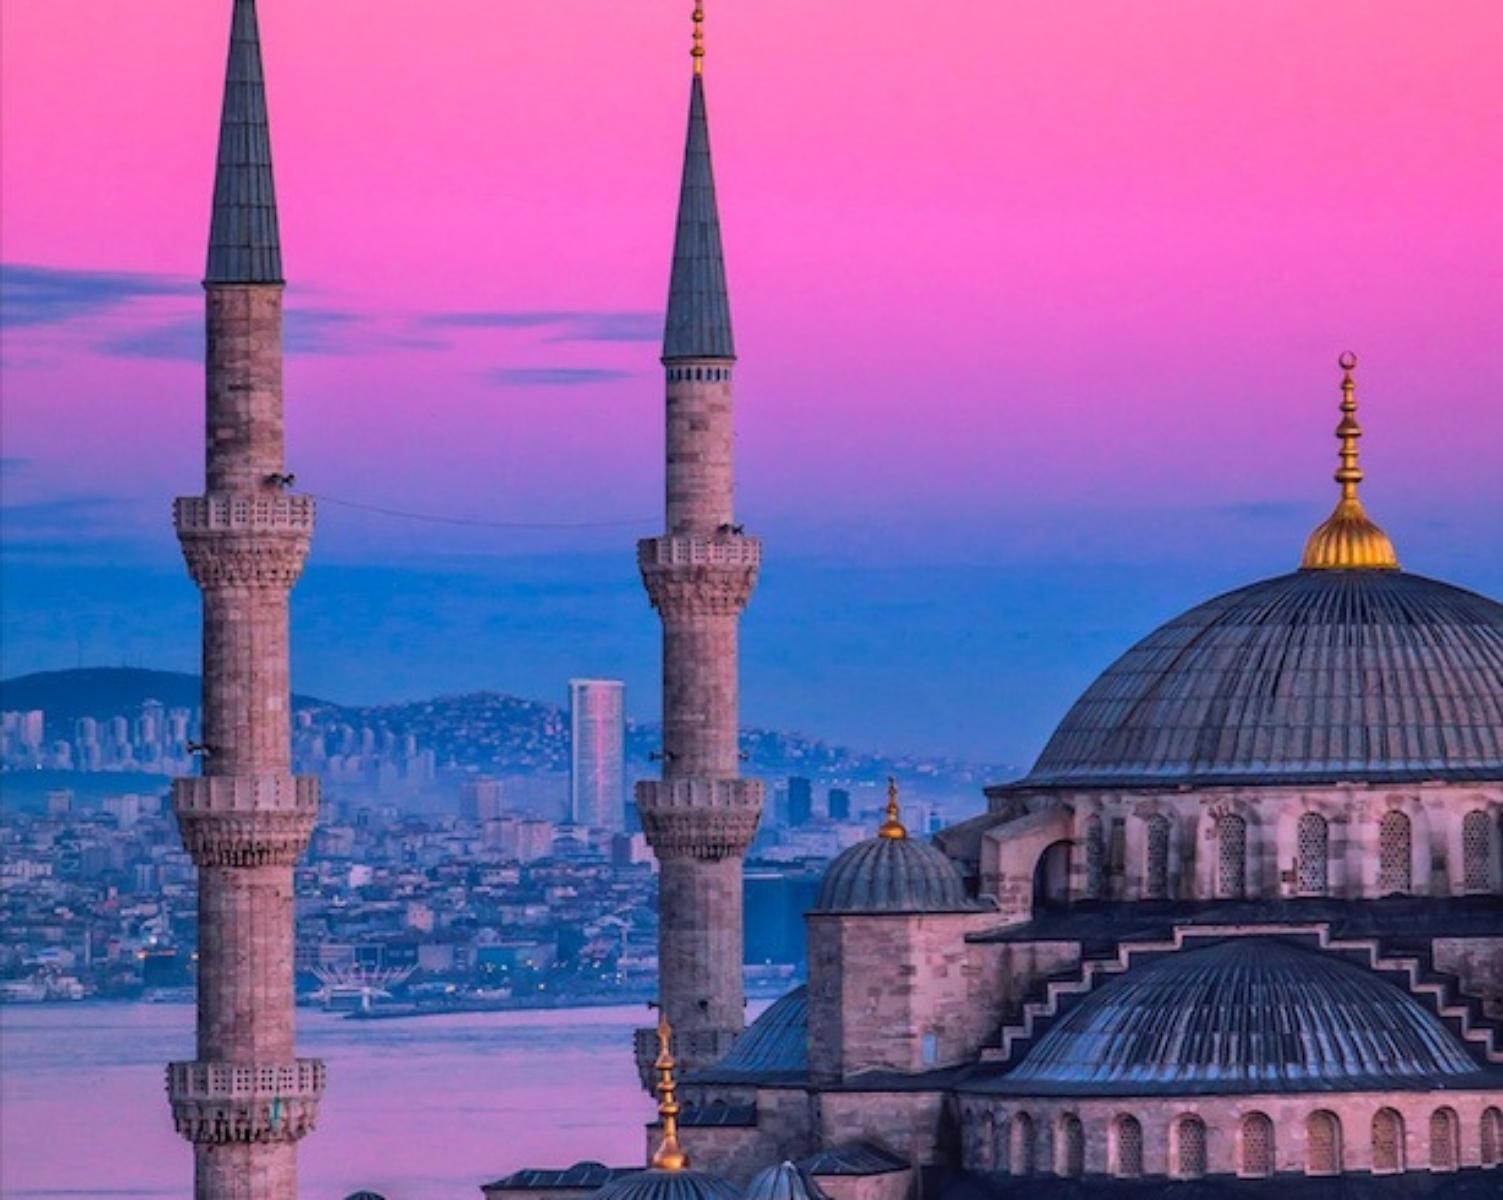 2. Hagia Sophia – Istanbul